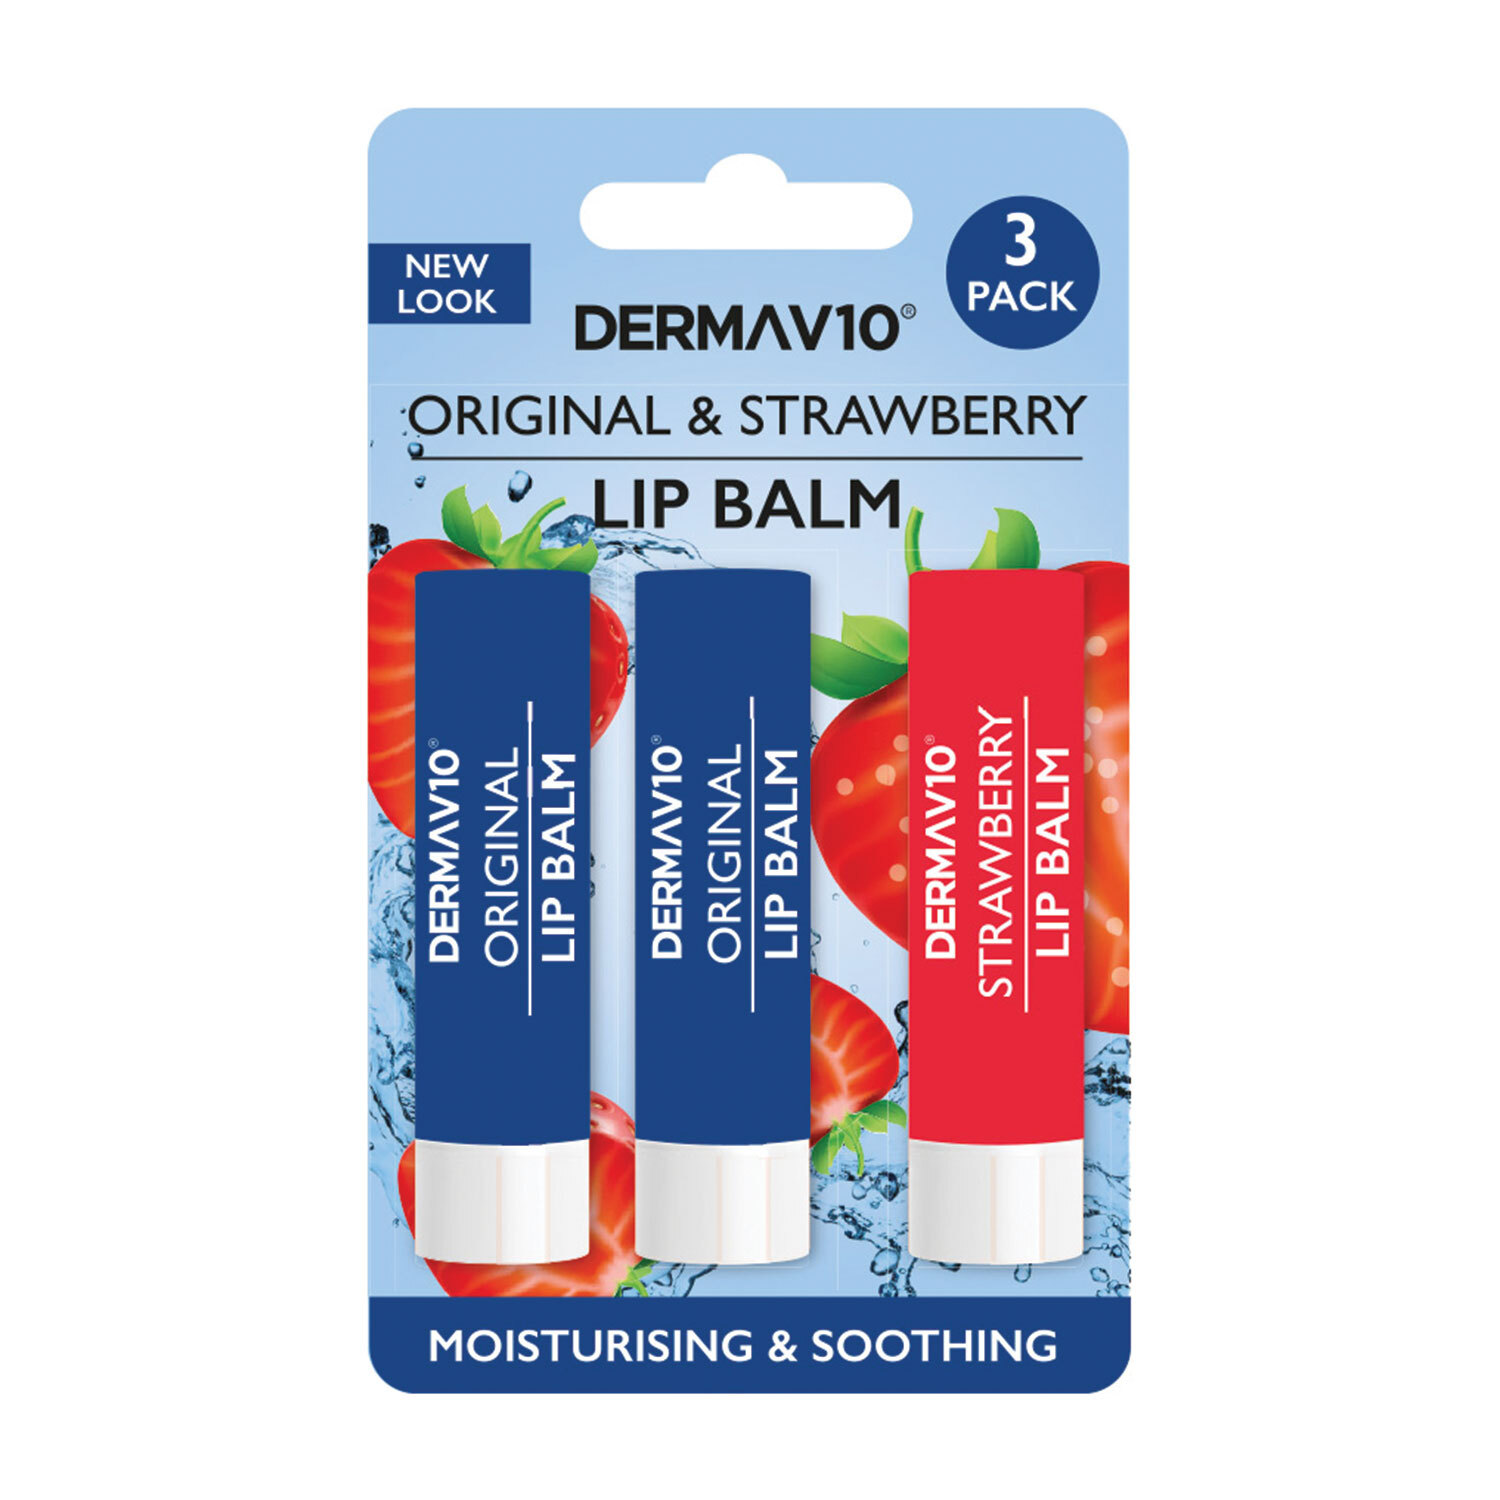 DermaV10 Original and Strawberry Lip Balm 3 Pack Image